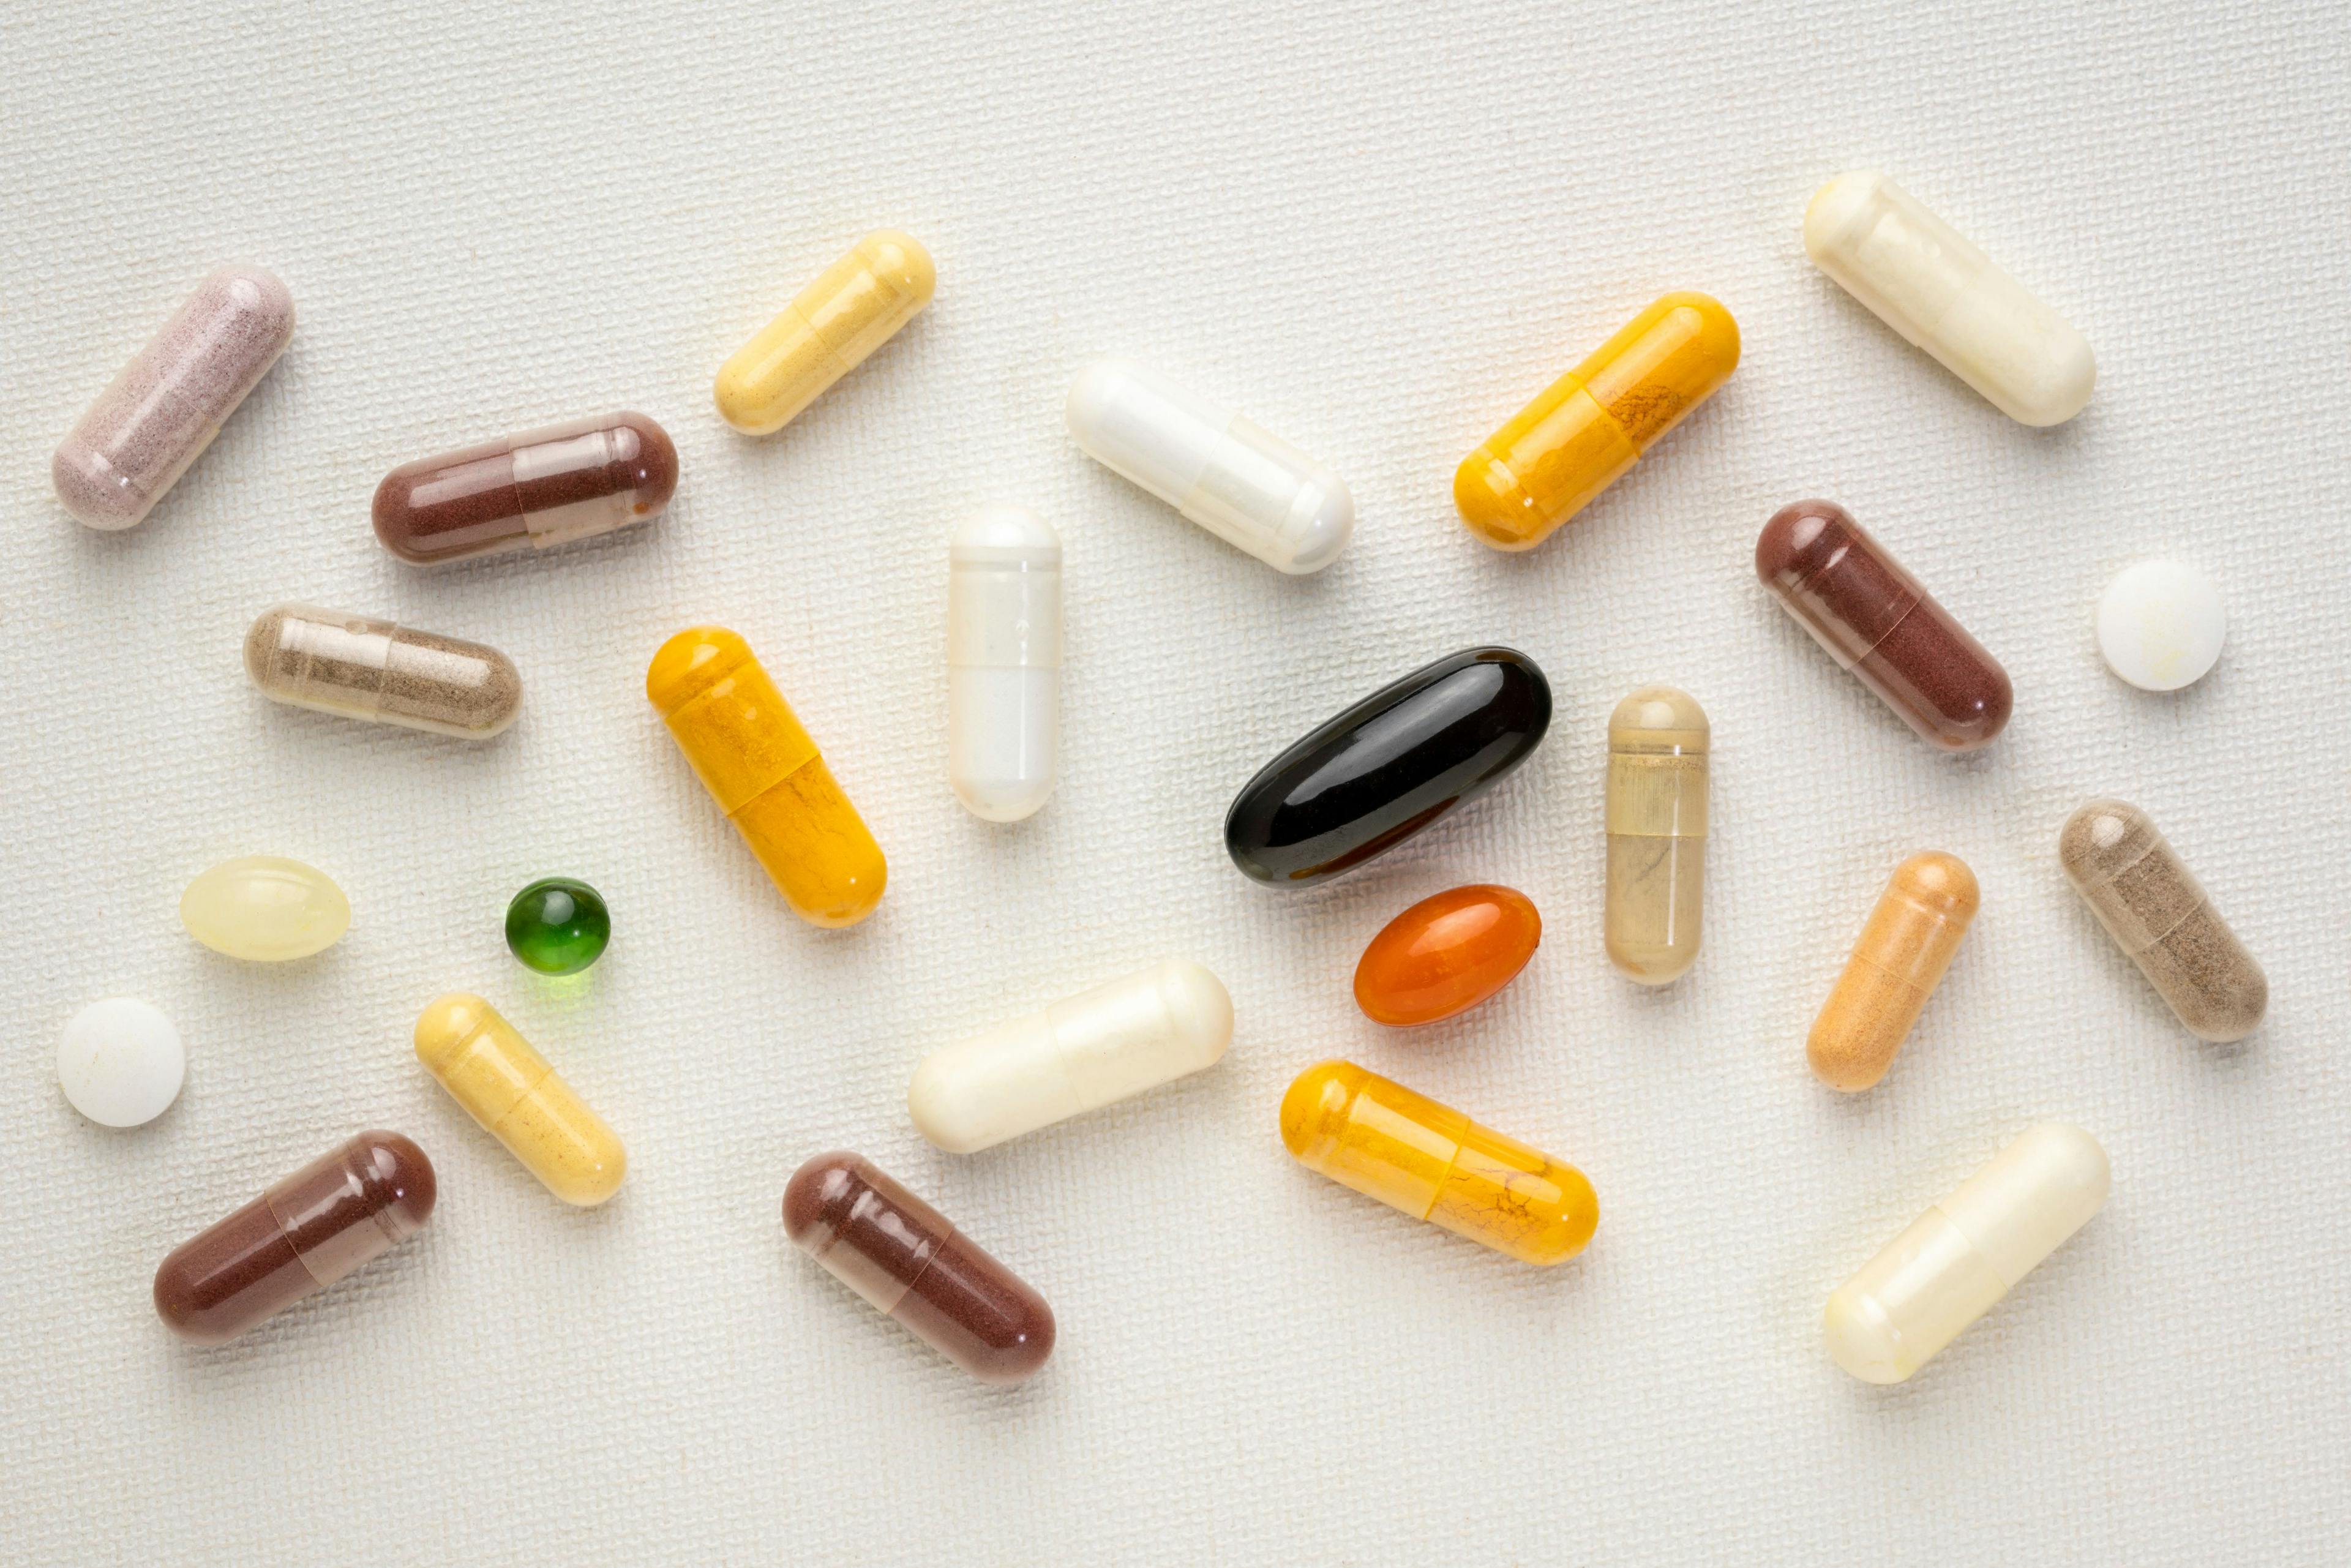 Vitamins and supplements background - Image credit: MarekPhotoDesign.com | stock.adobe.com